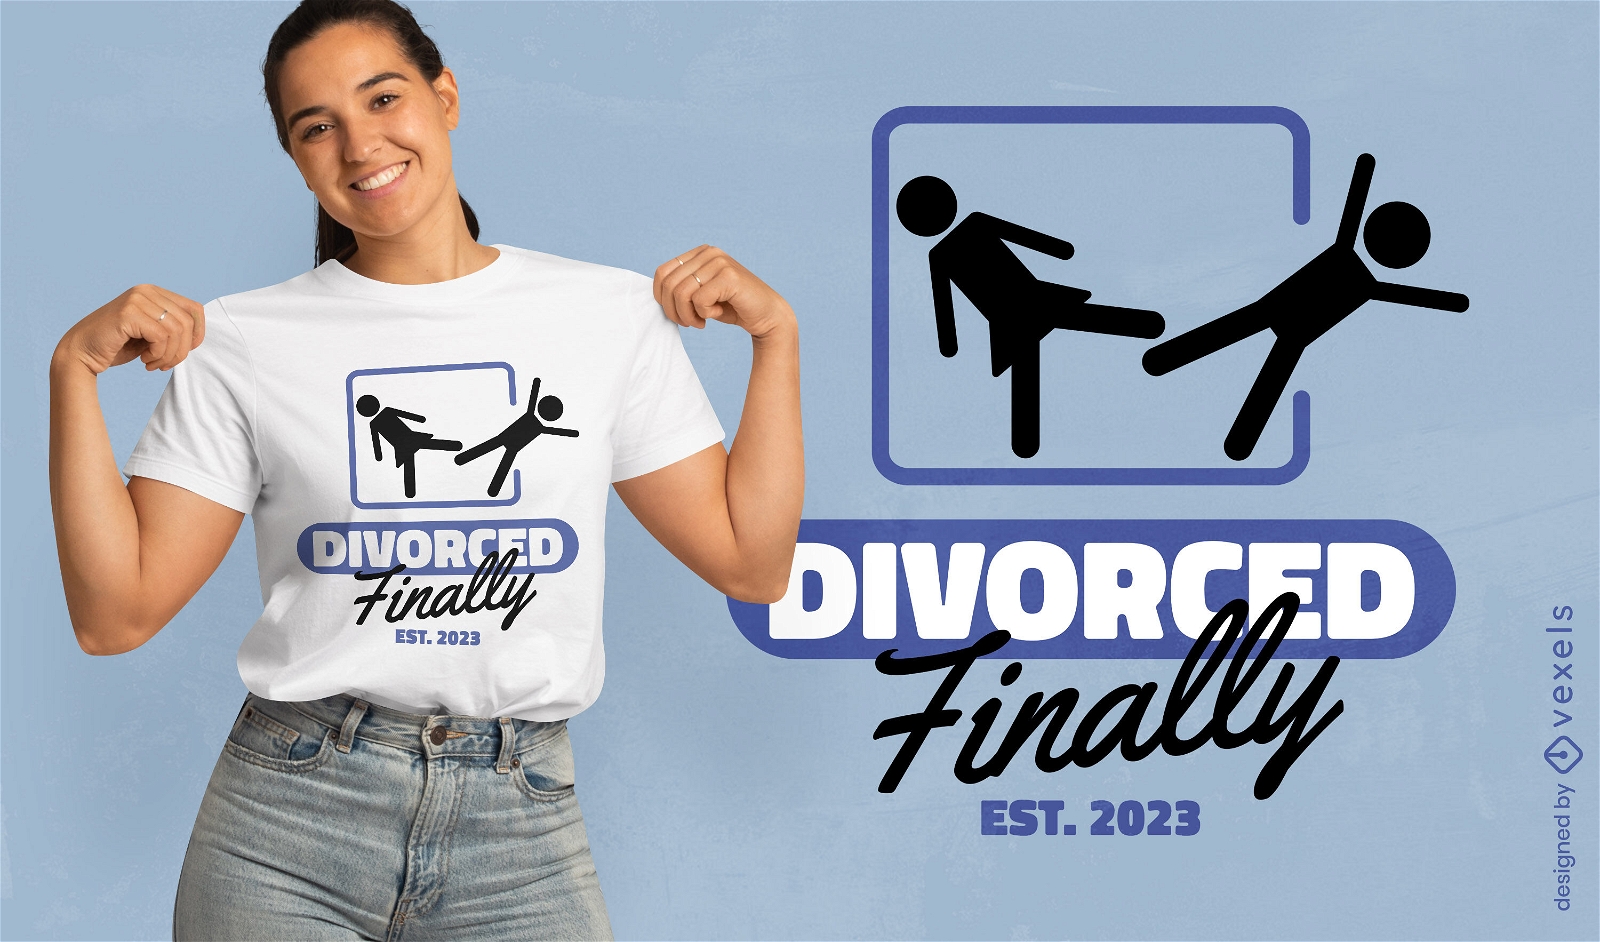 Design engra?ado de camiseta de casal divorciado